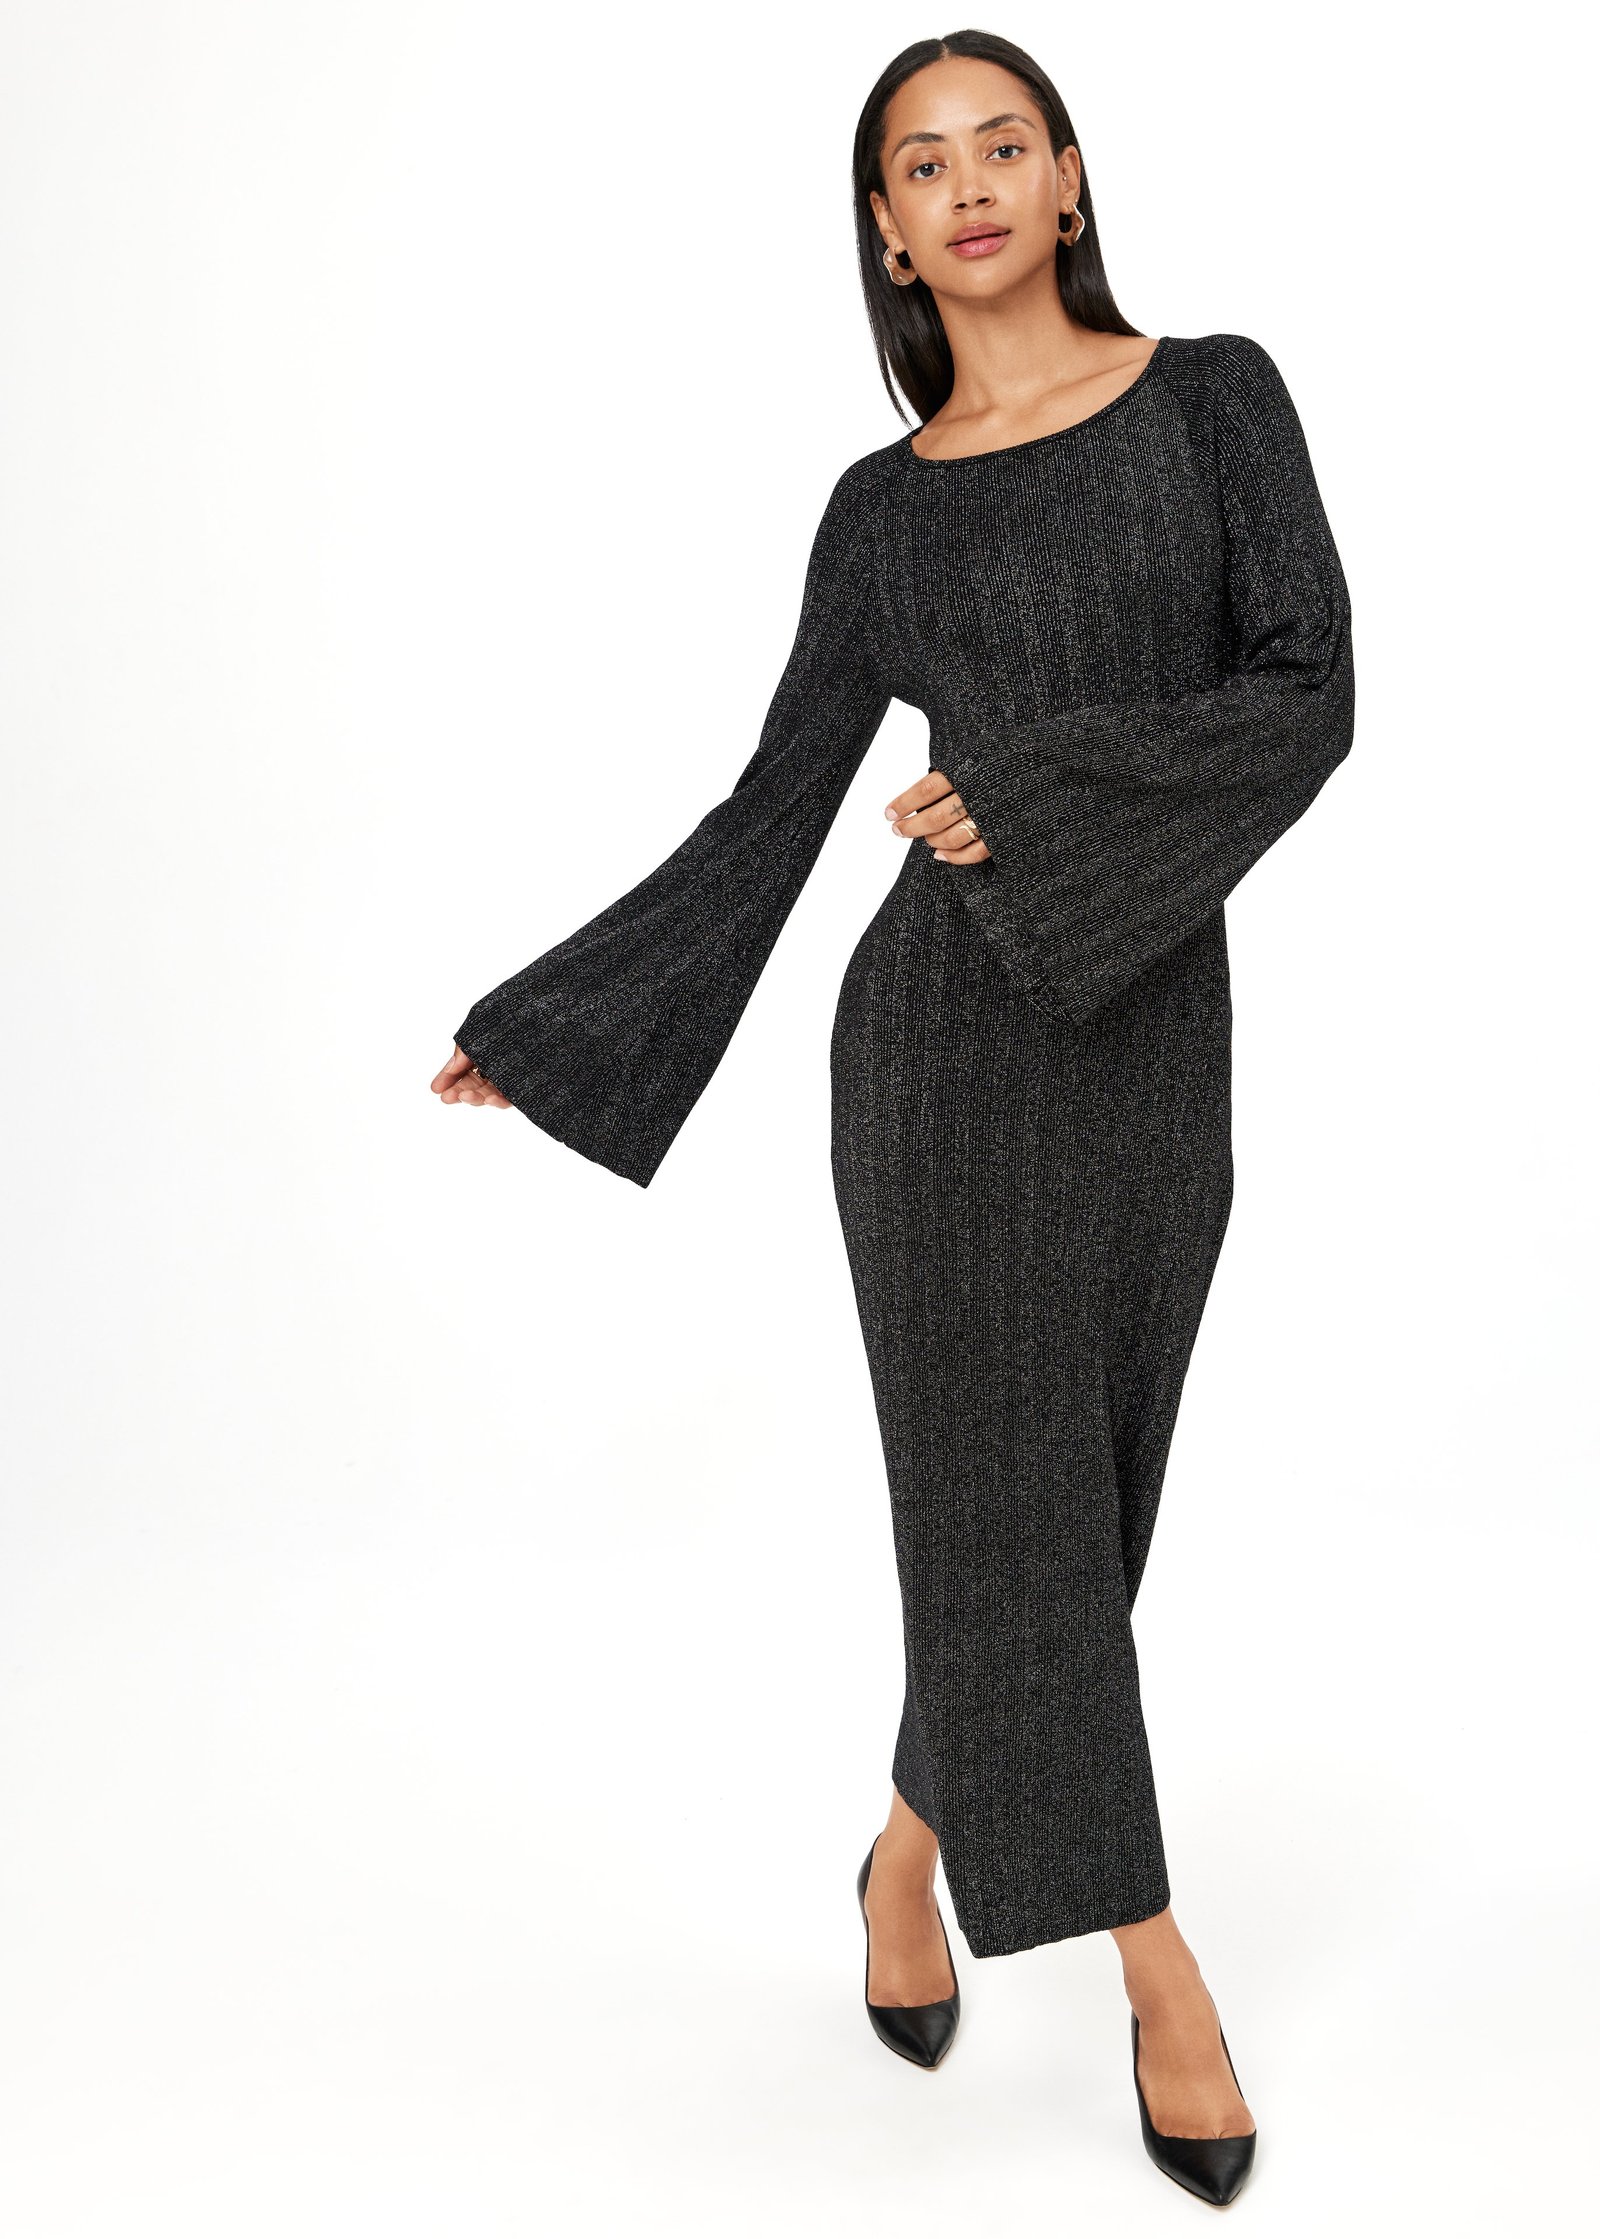 Black knitted dress